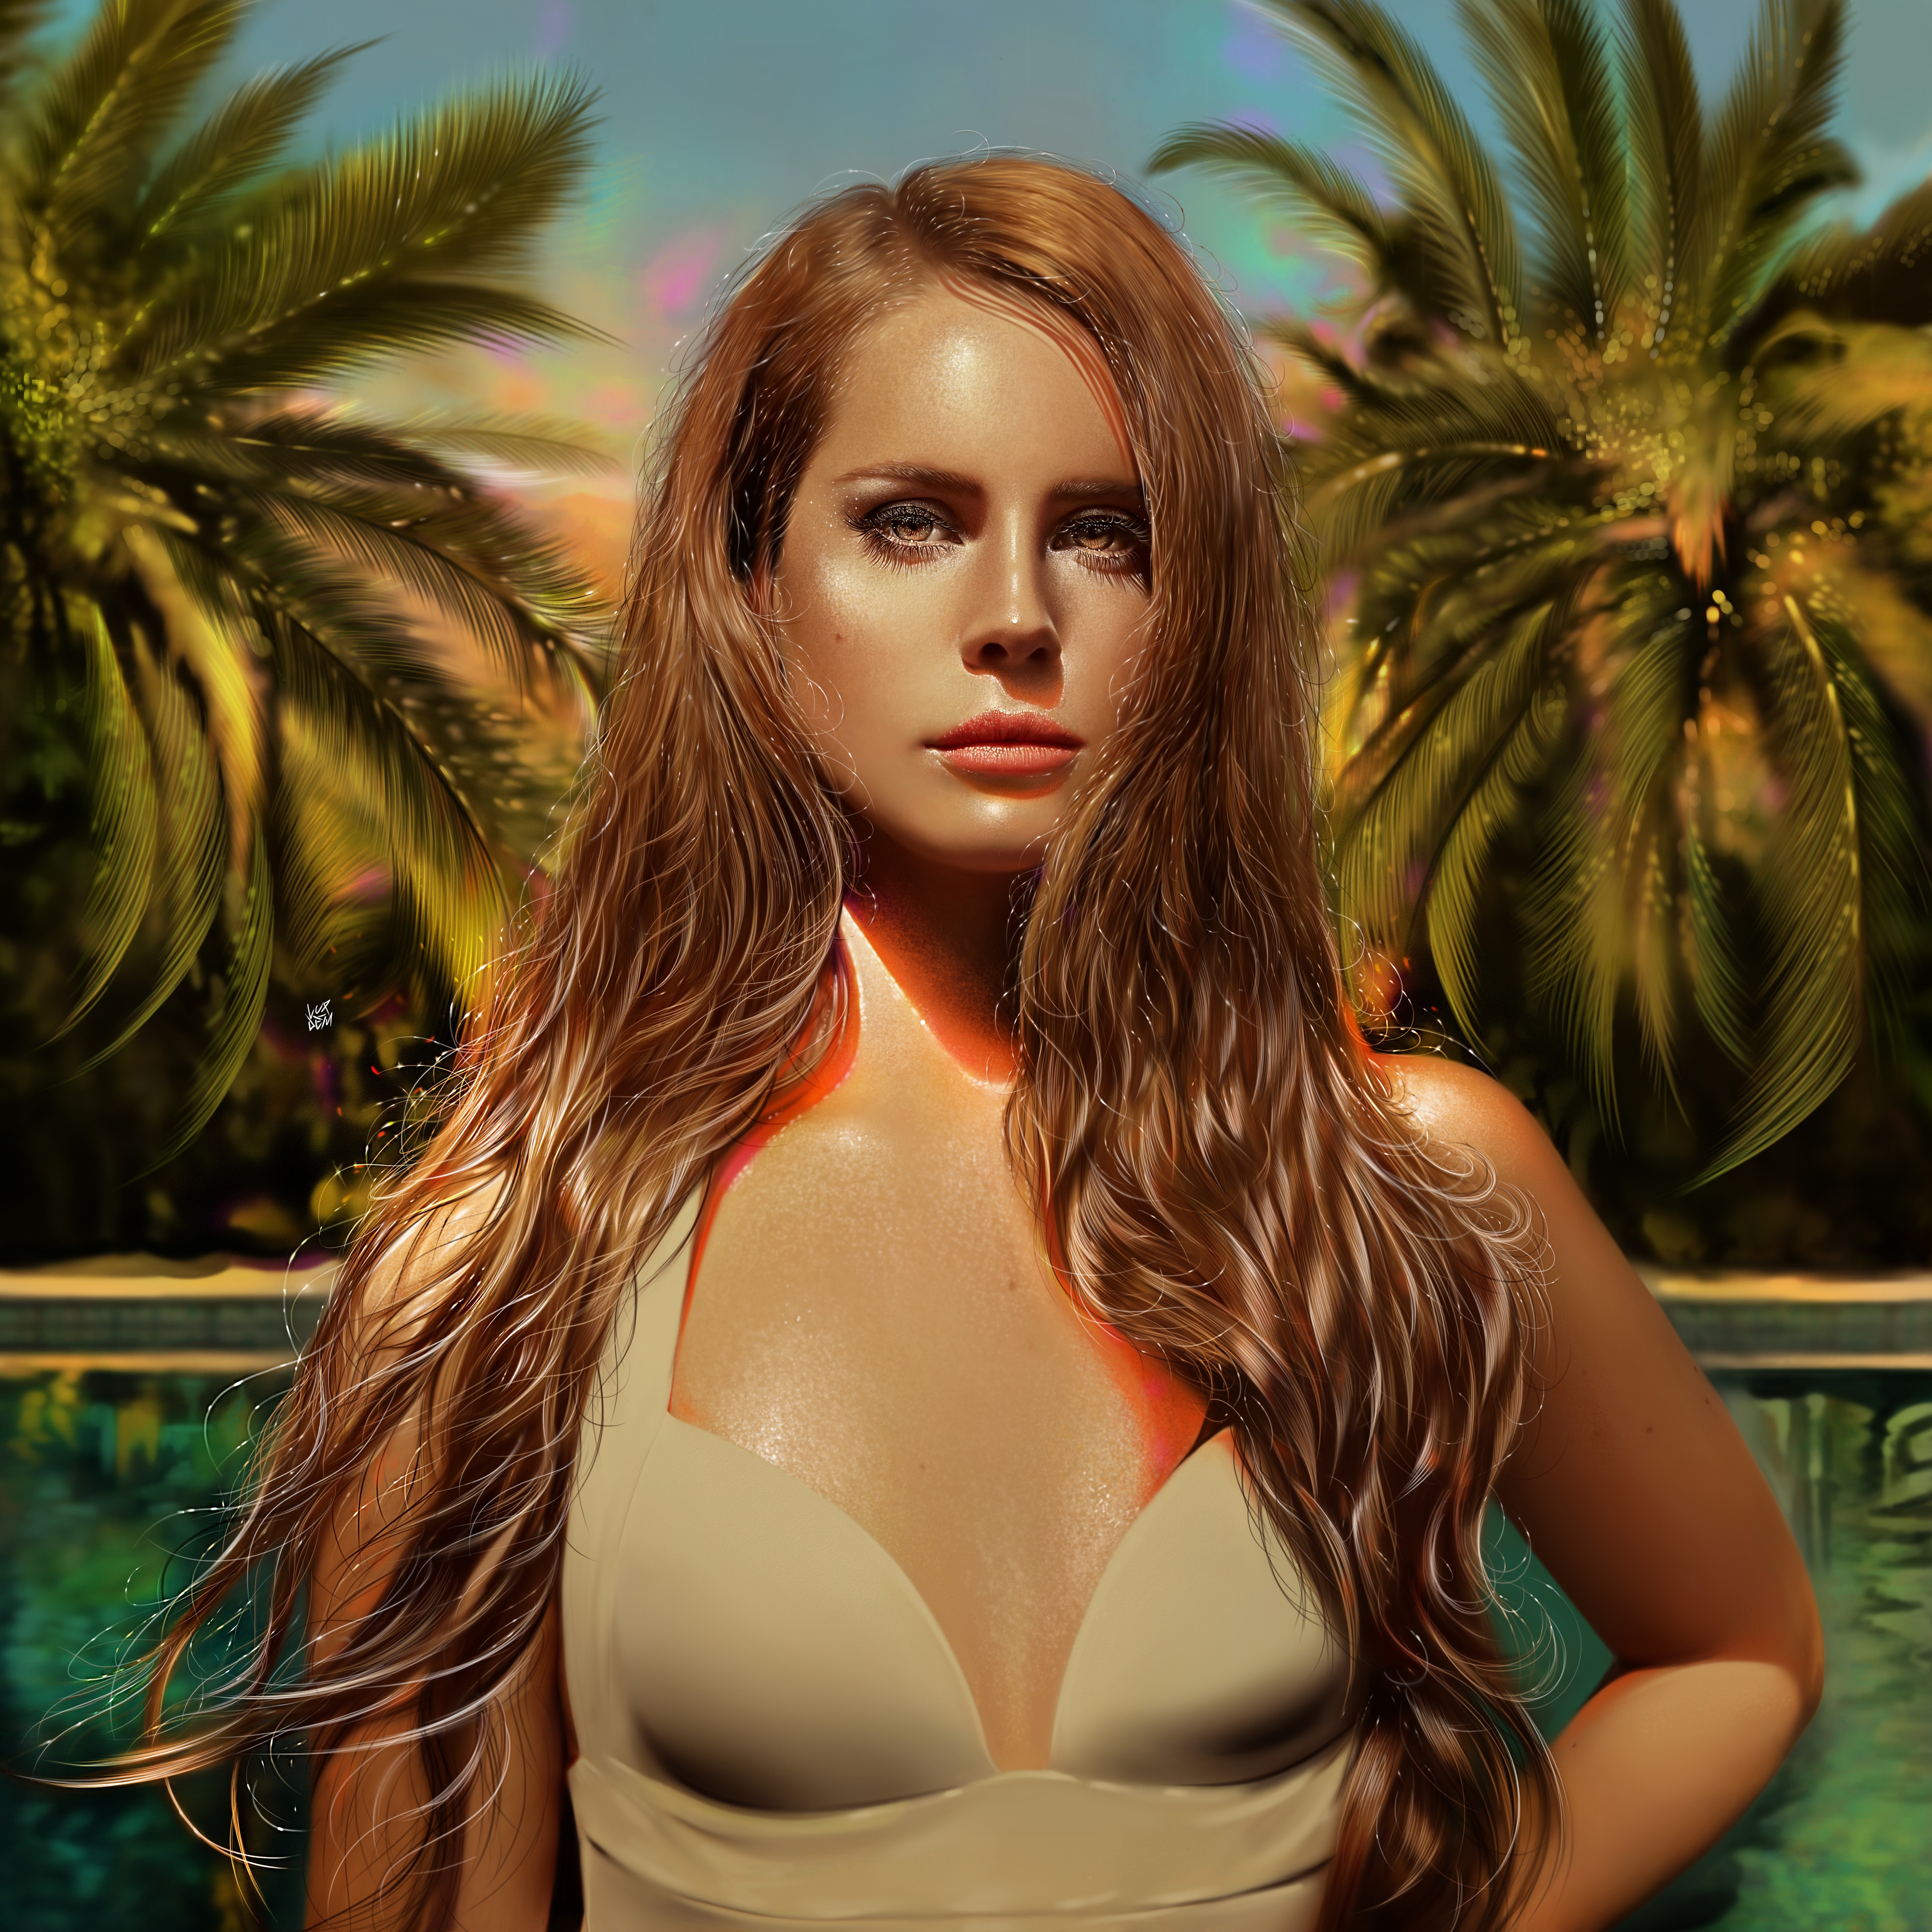 HD wallpaper, Lana Del Rey, American Singer, Digital Art, Portrait